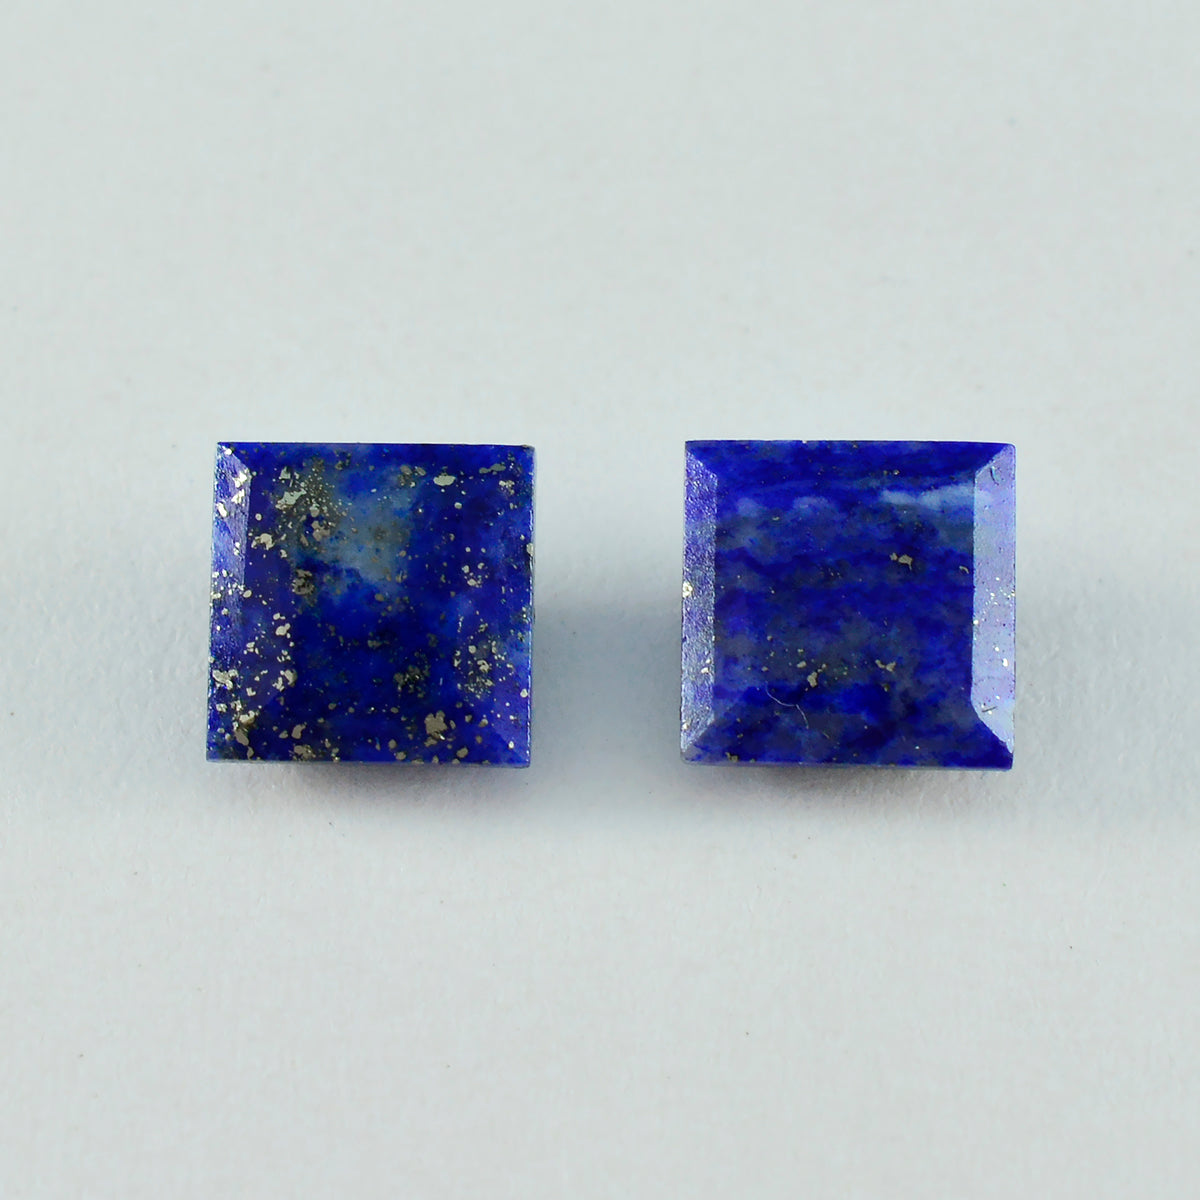 Riyogems 1PC Natuurlijke Blauwe Lapis Lazuli Facet 11x11 mm Vierkante Vorm knappe Kwaliteit Losse Edelstenen